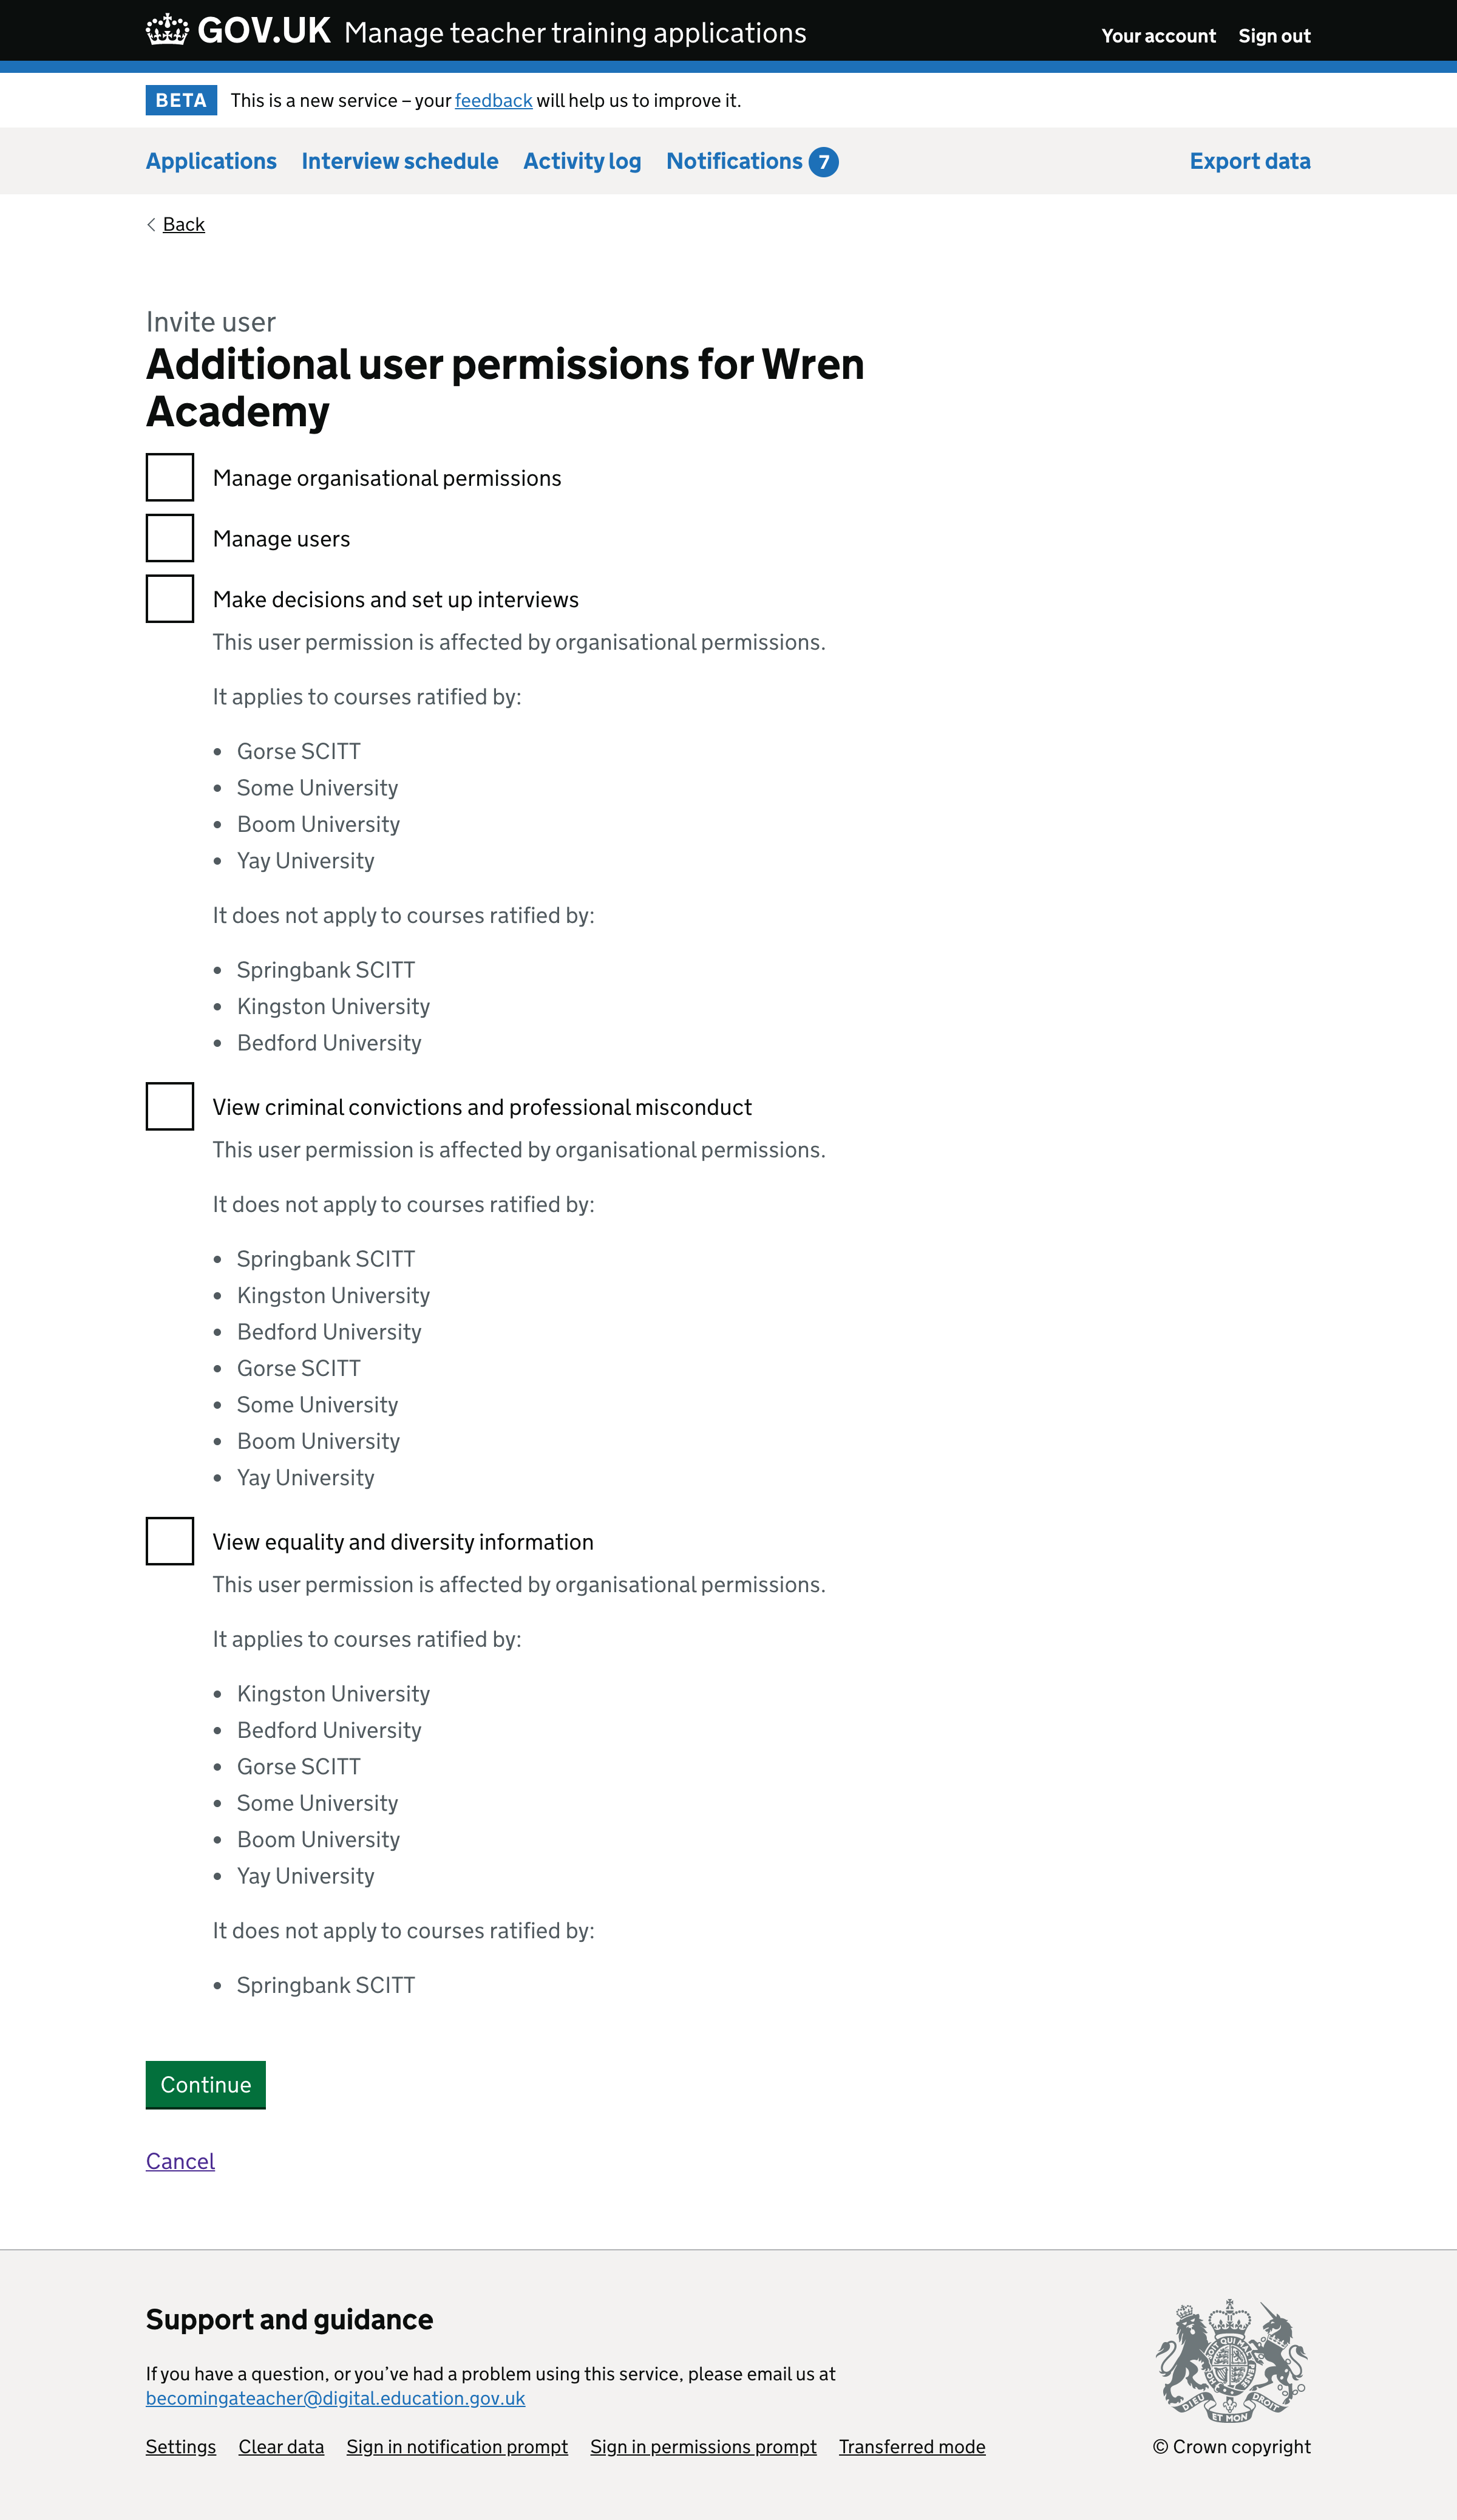 Screenshot of additional permissions form.